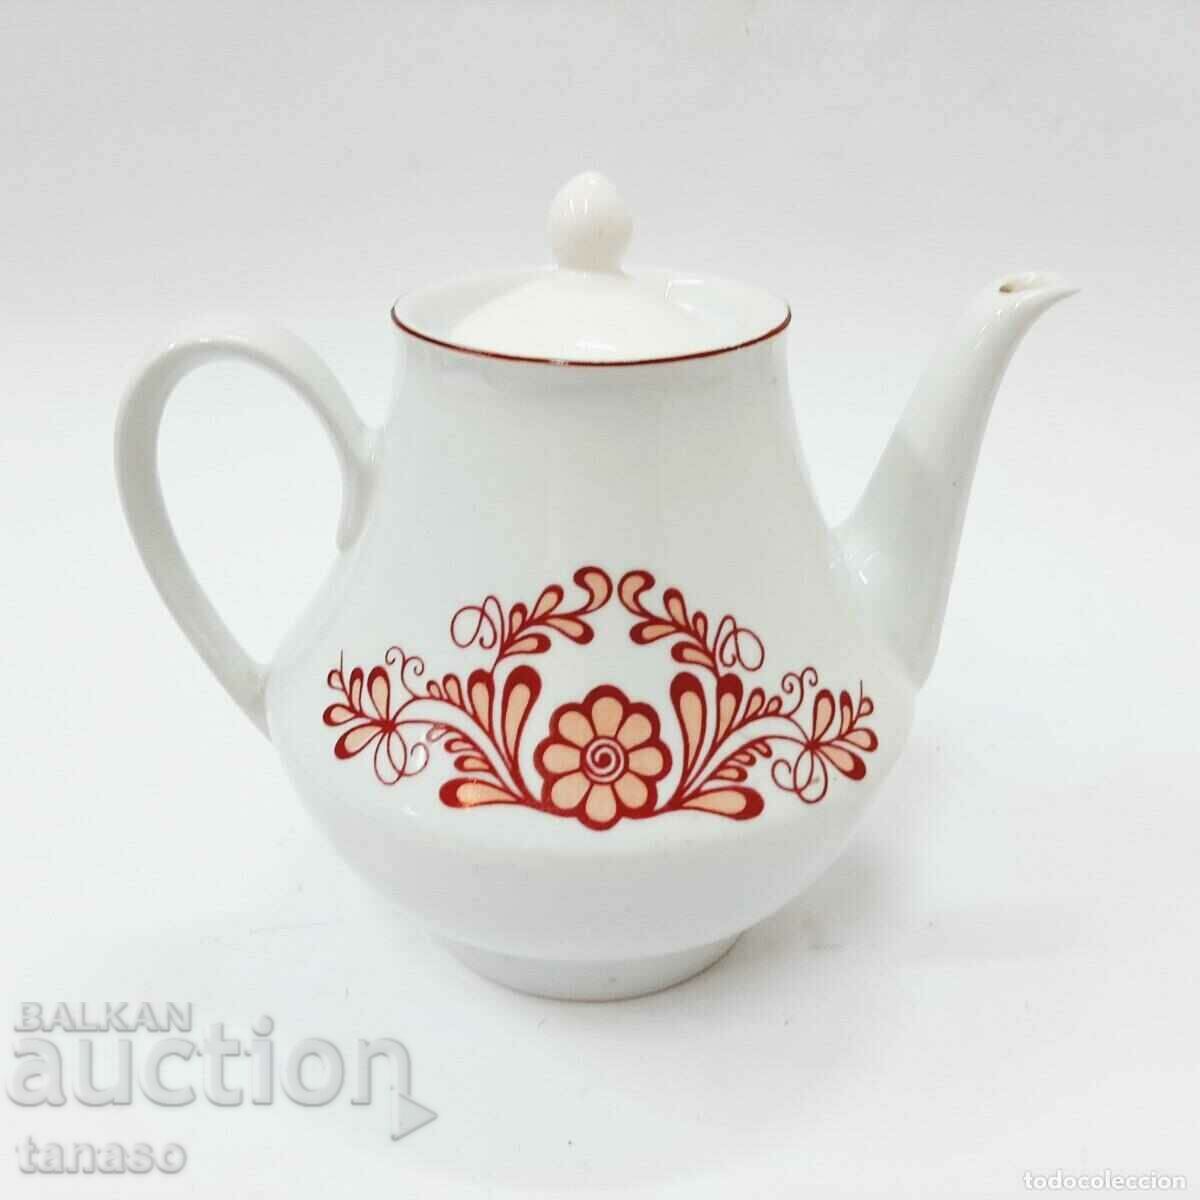 Old Porcelain Painted Teapot (12.3)